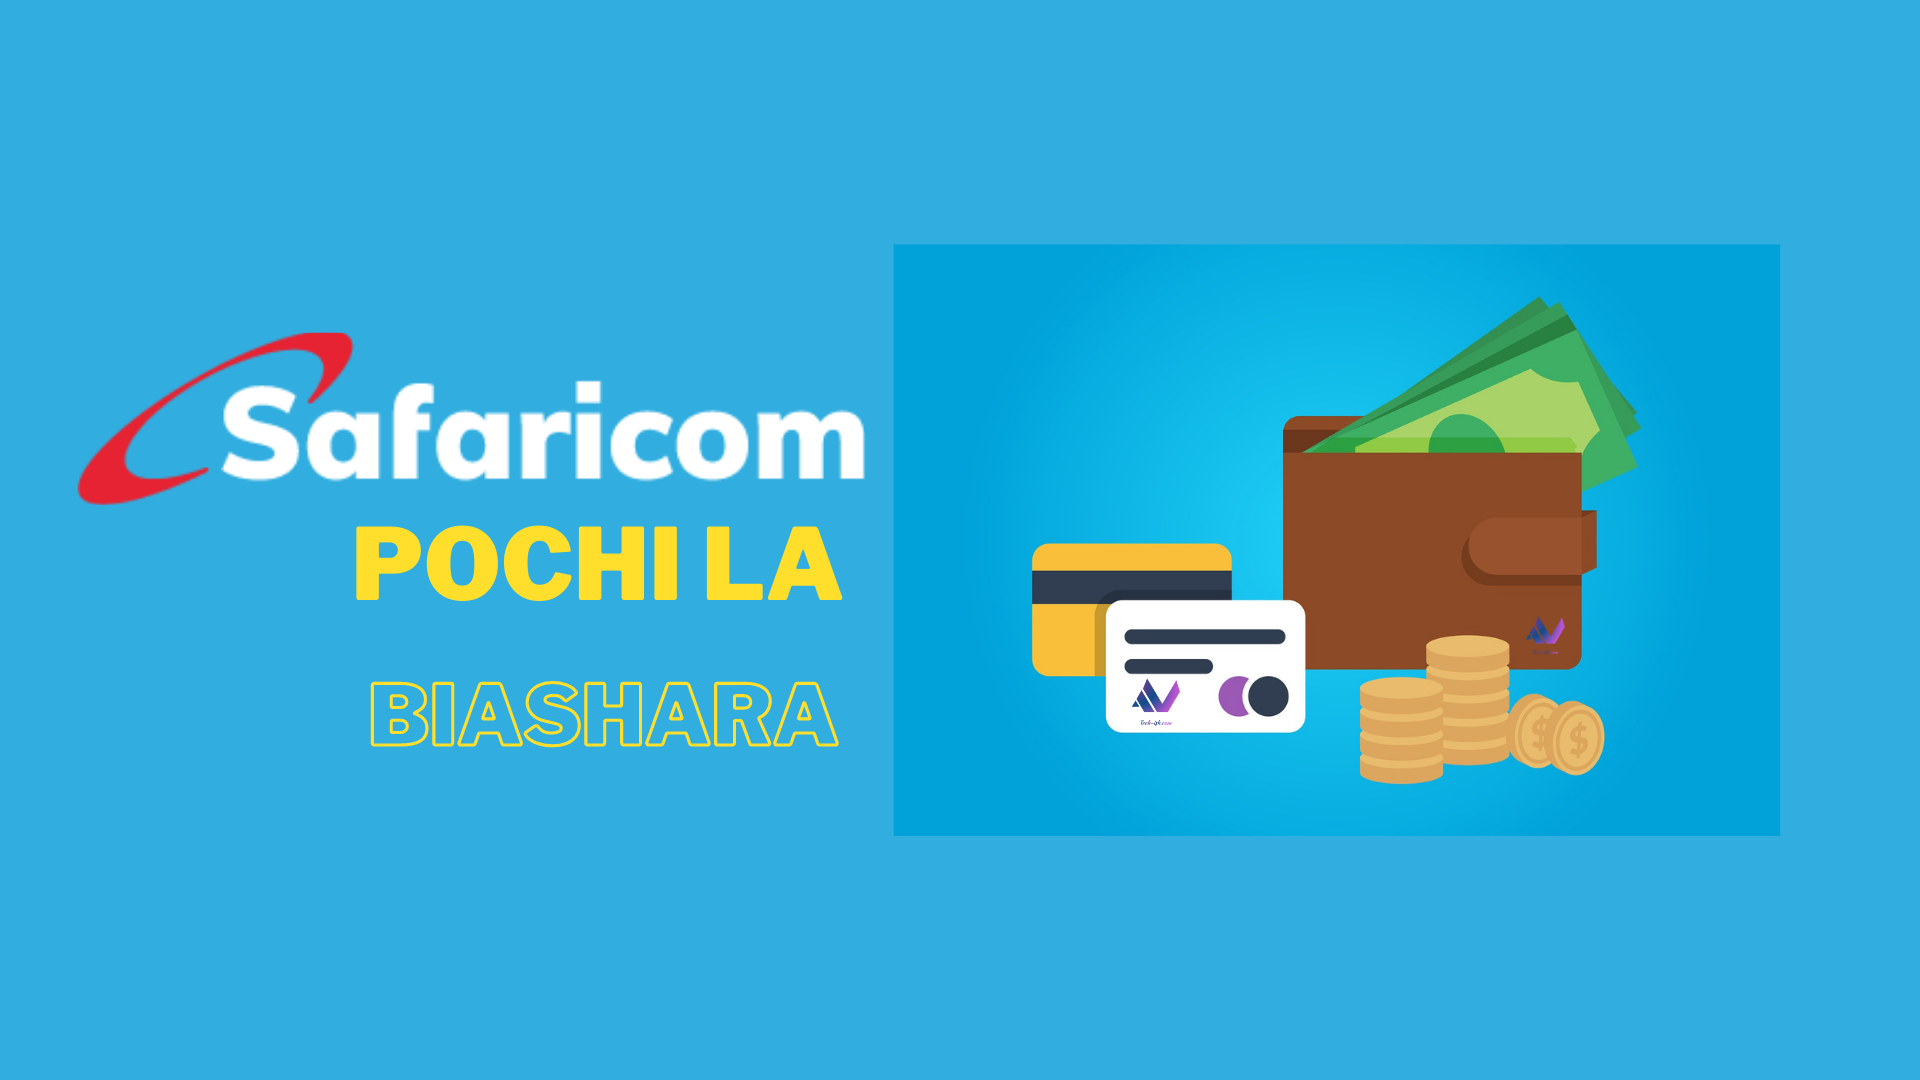 How to sign up for Pochi la Biashara: